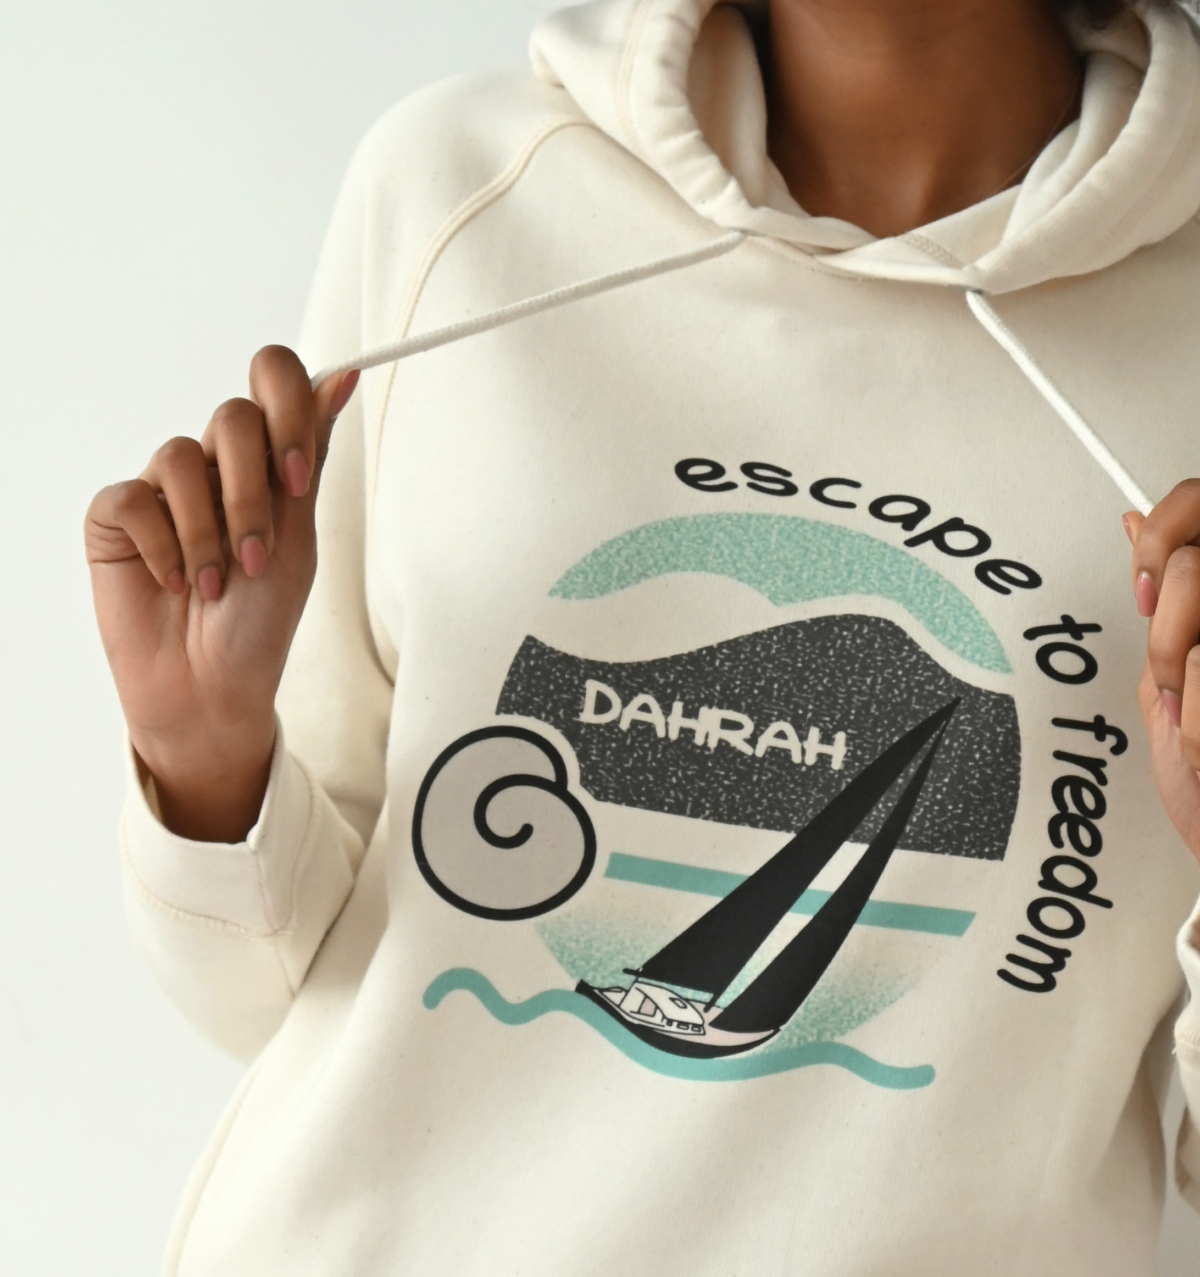 Beautiful high quality organic hoodie with print of a sailing boat by Dahrah Darah Fashion.